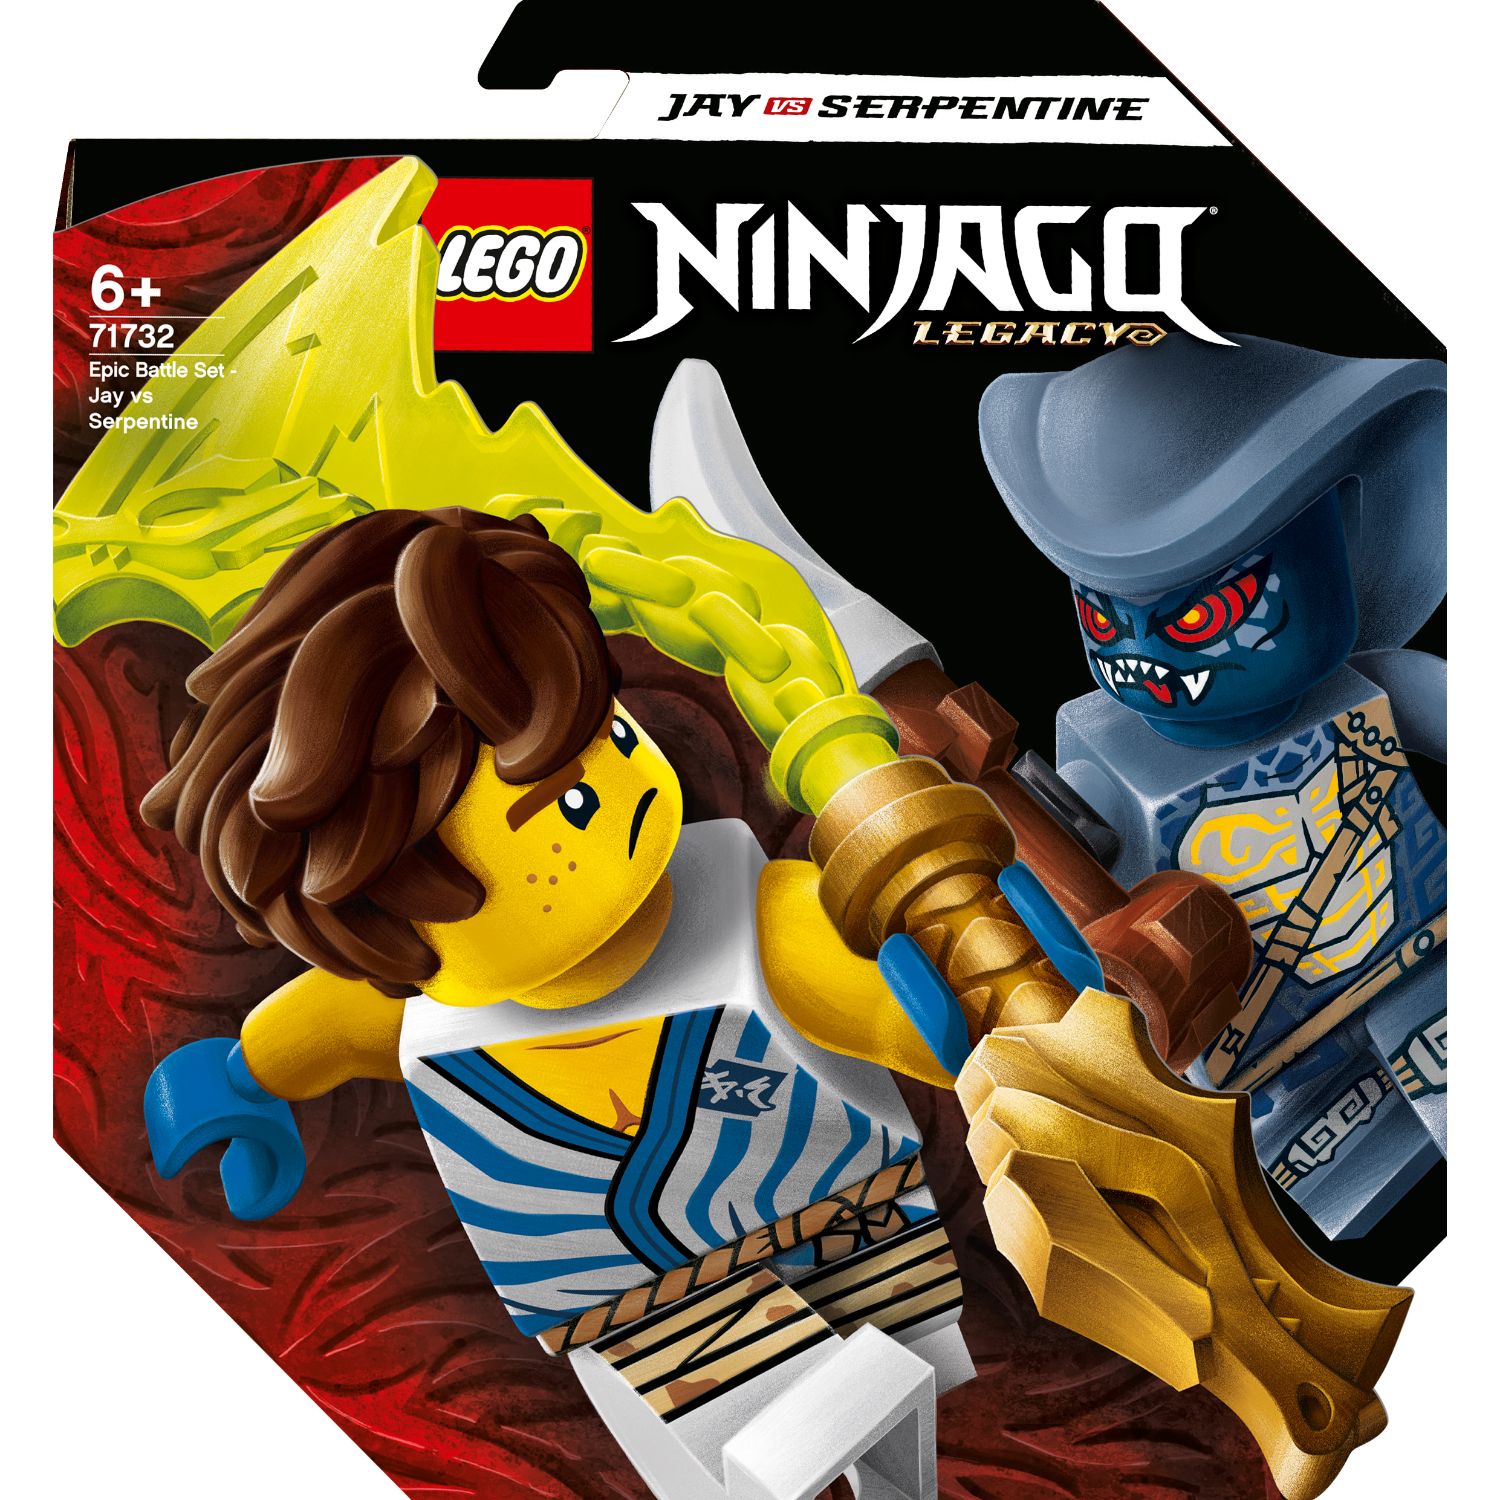 LEGO NINJAGO 71732 EPIC BATTLE SET - JAY VS. SERPENTINE